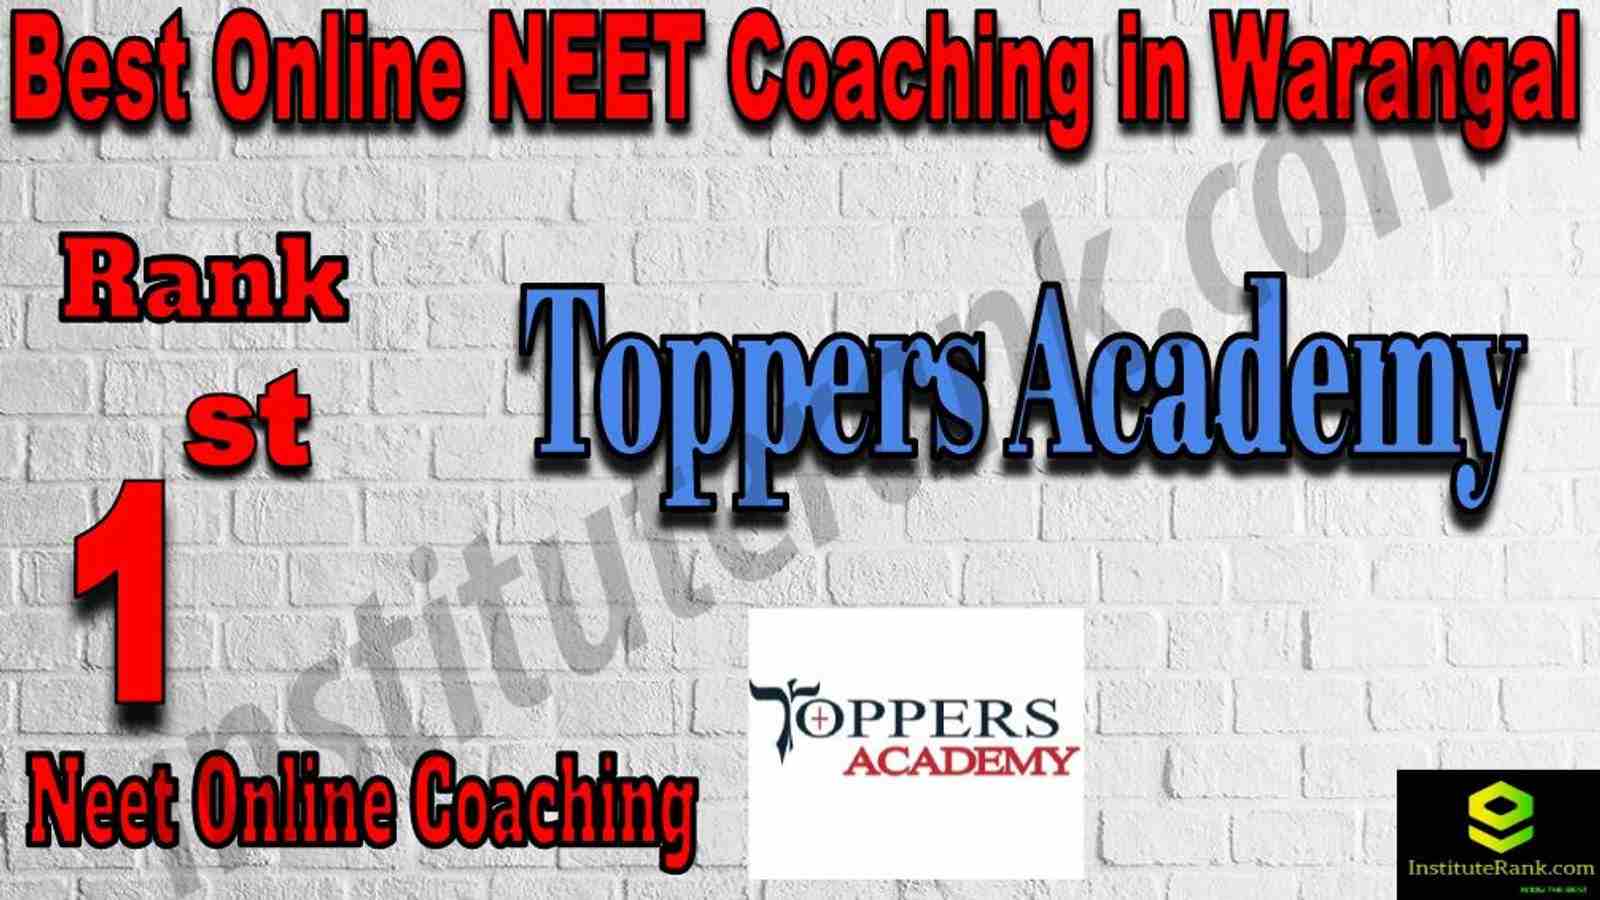 1st Best Online Neet Coaching in Warangal